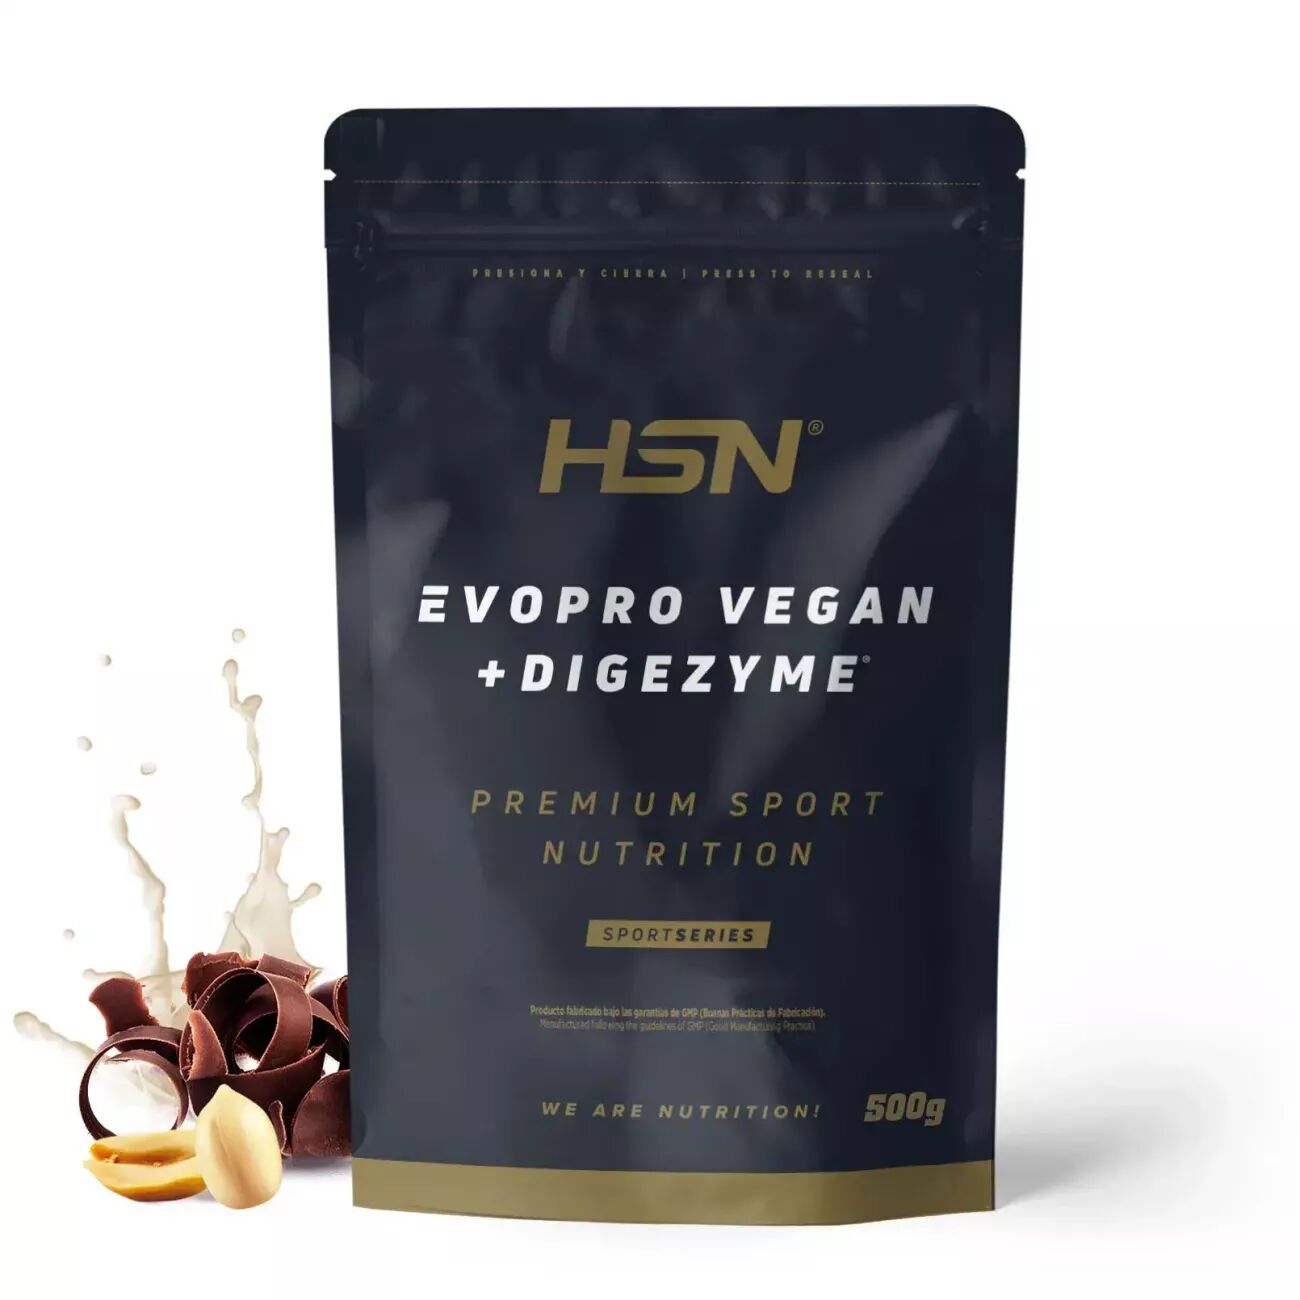 HSN Evopro vegan (mezcla proteínas premium) + digezyme® 500g chocolate y cacahuete